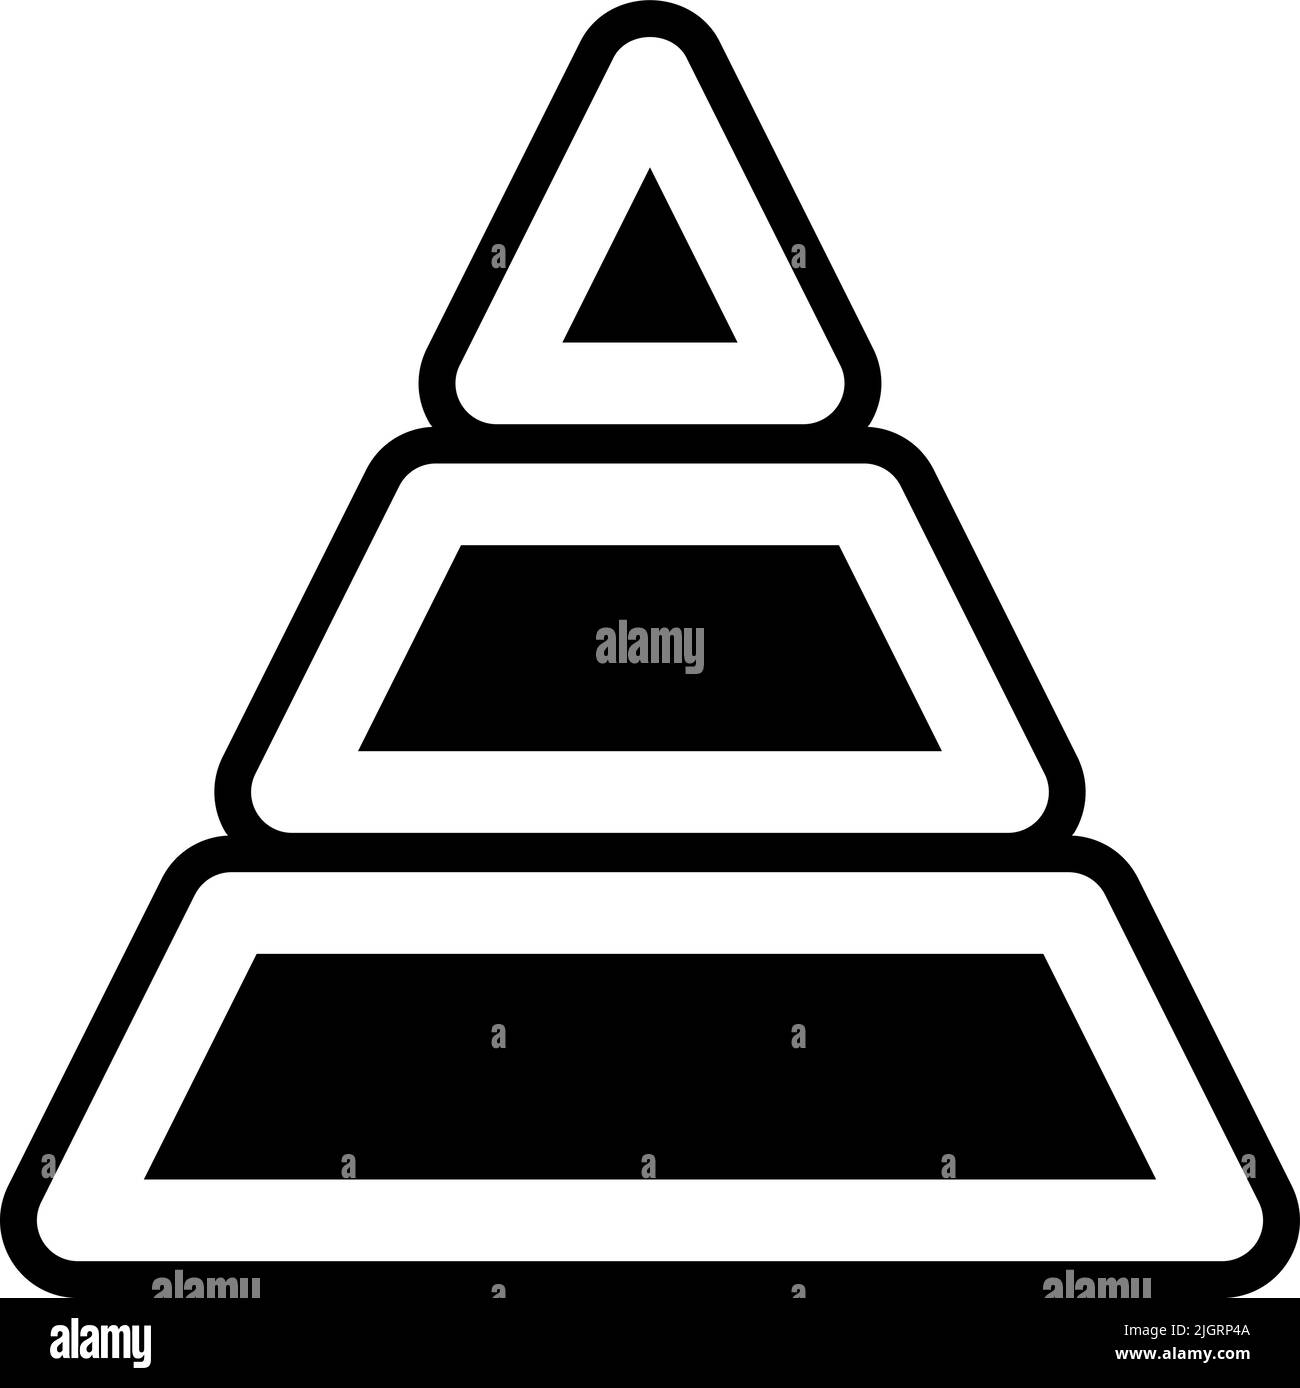 Pyramid diagram Black and White Stock Photos & Images - Alamy